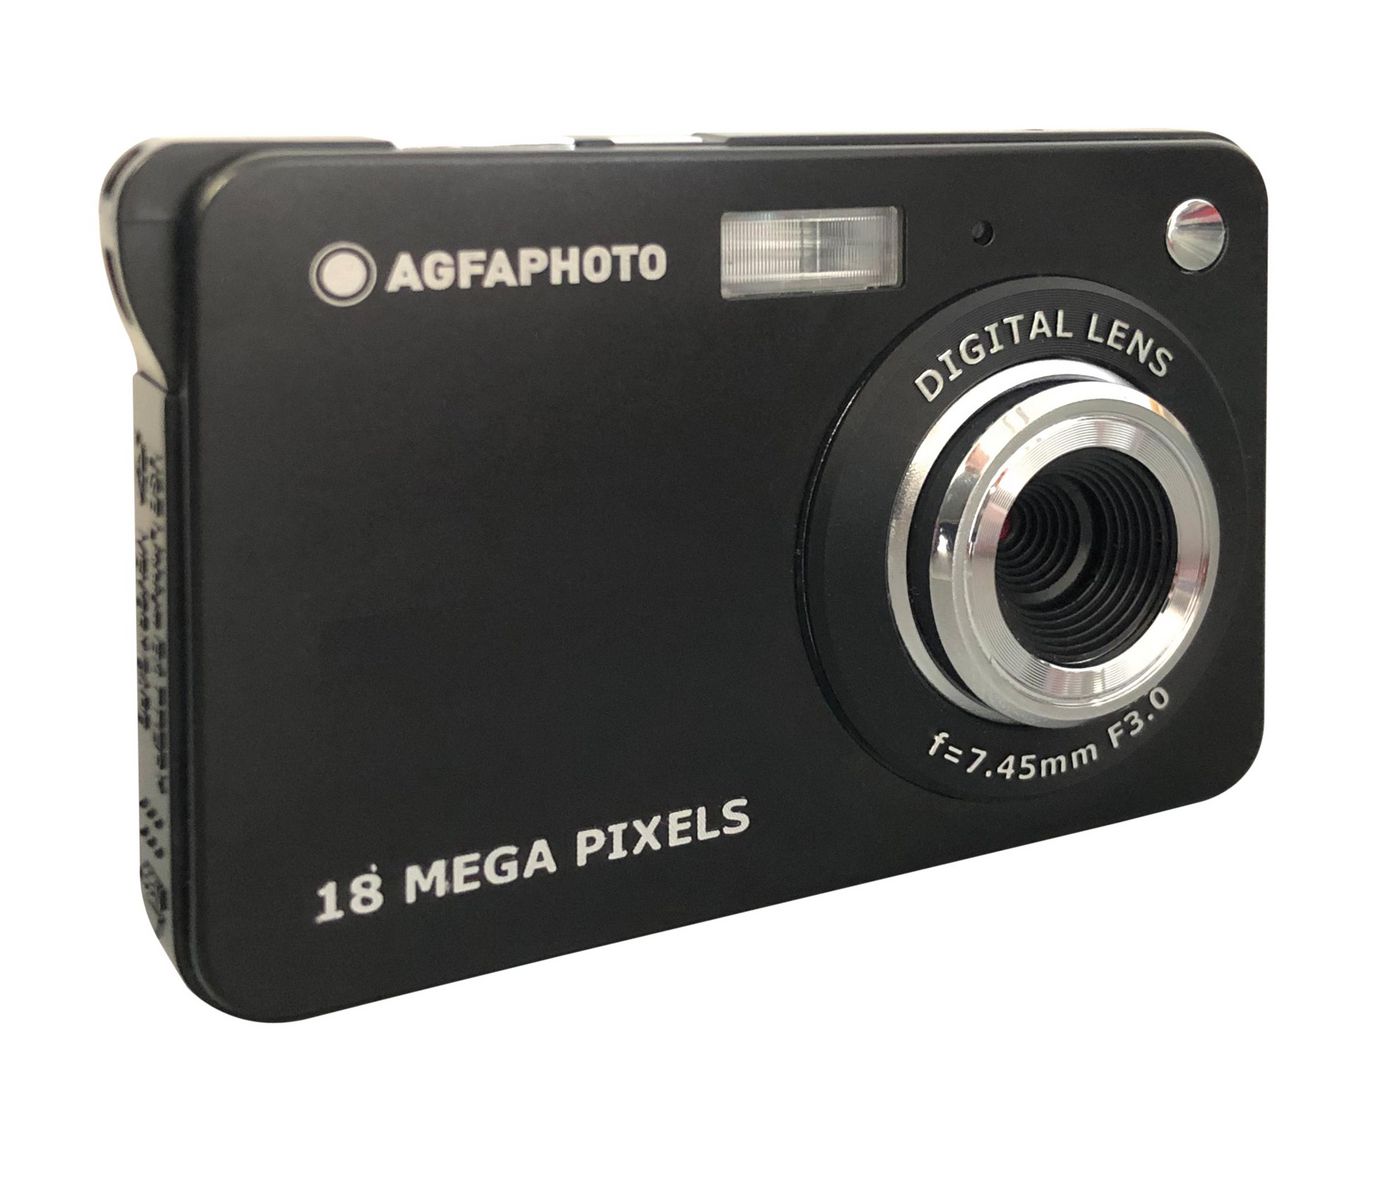 AgfaPhoto DC5100BK W128822973 Compact Dc5100 Compact Camera 